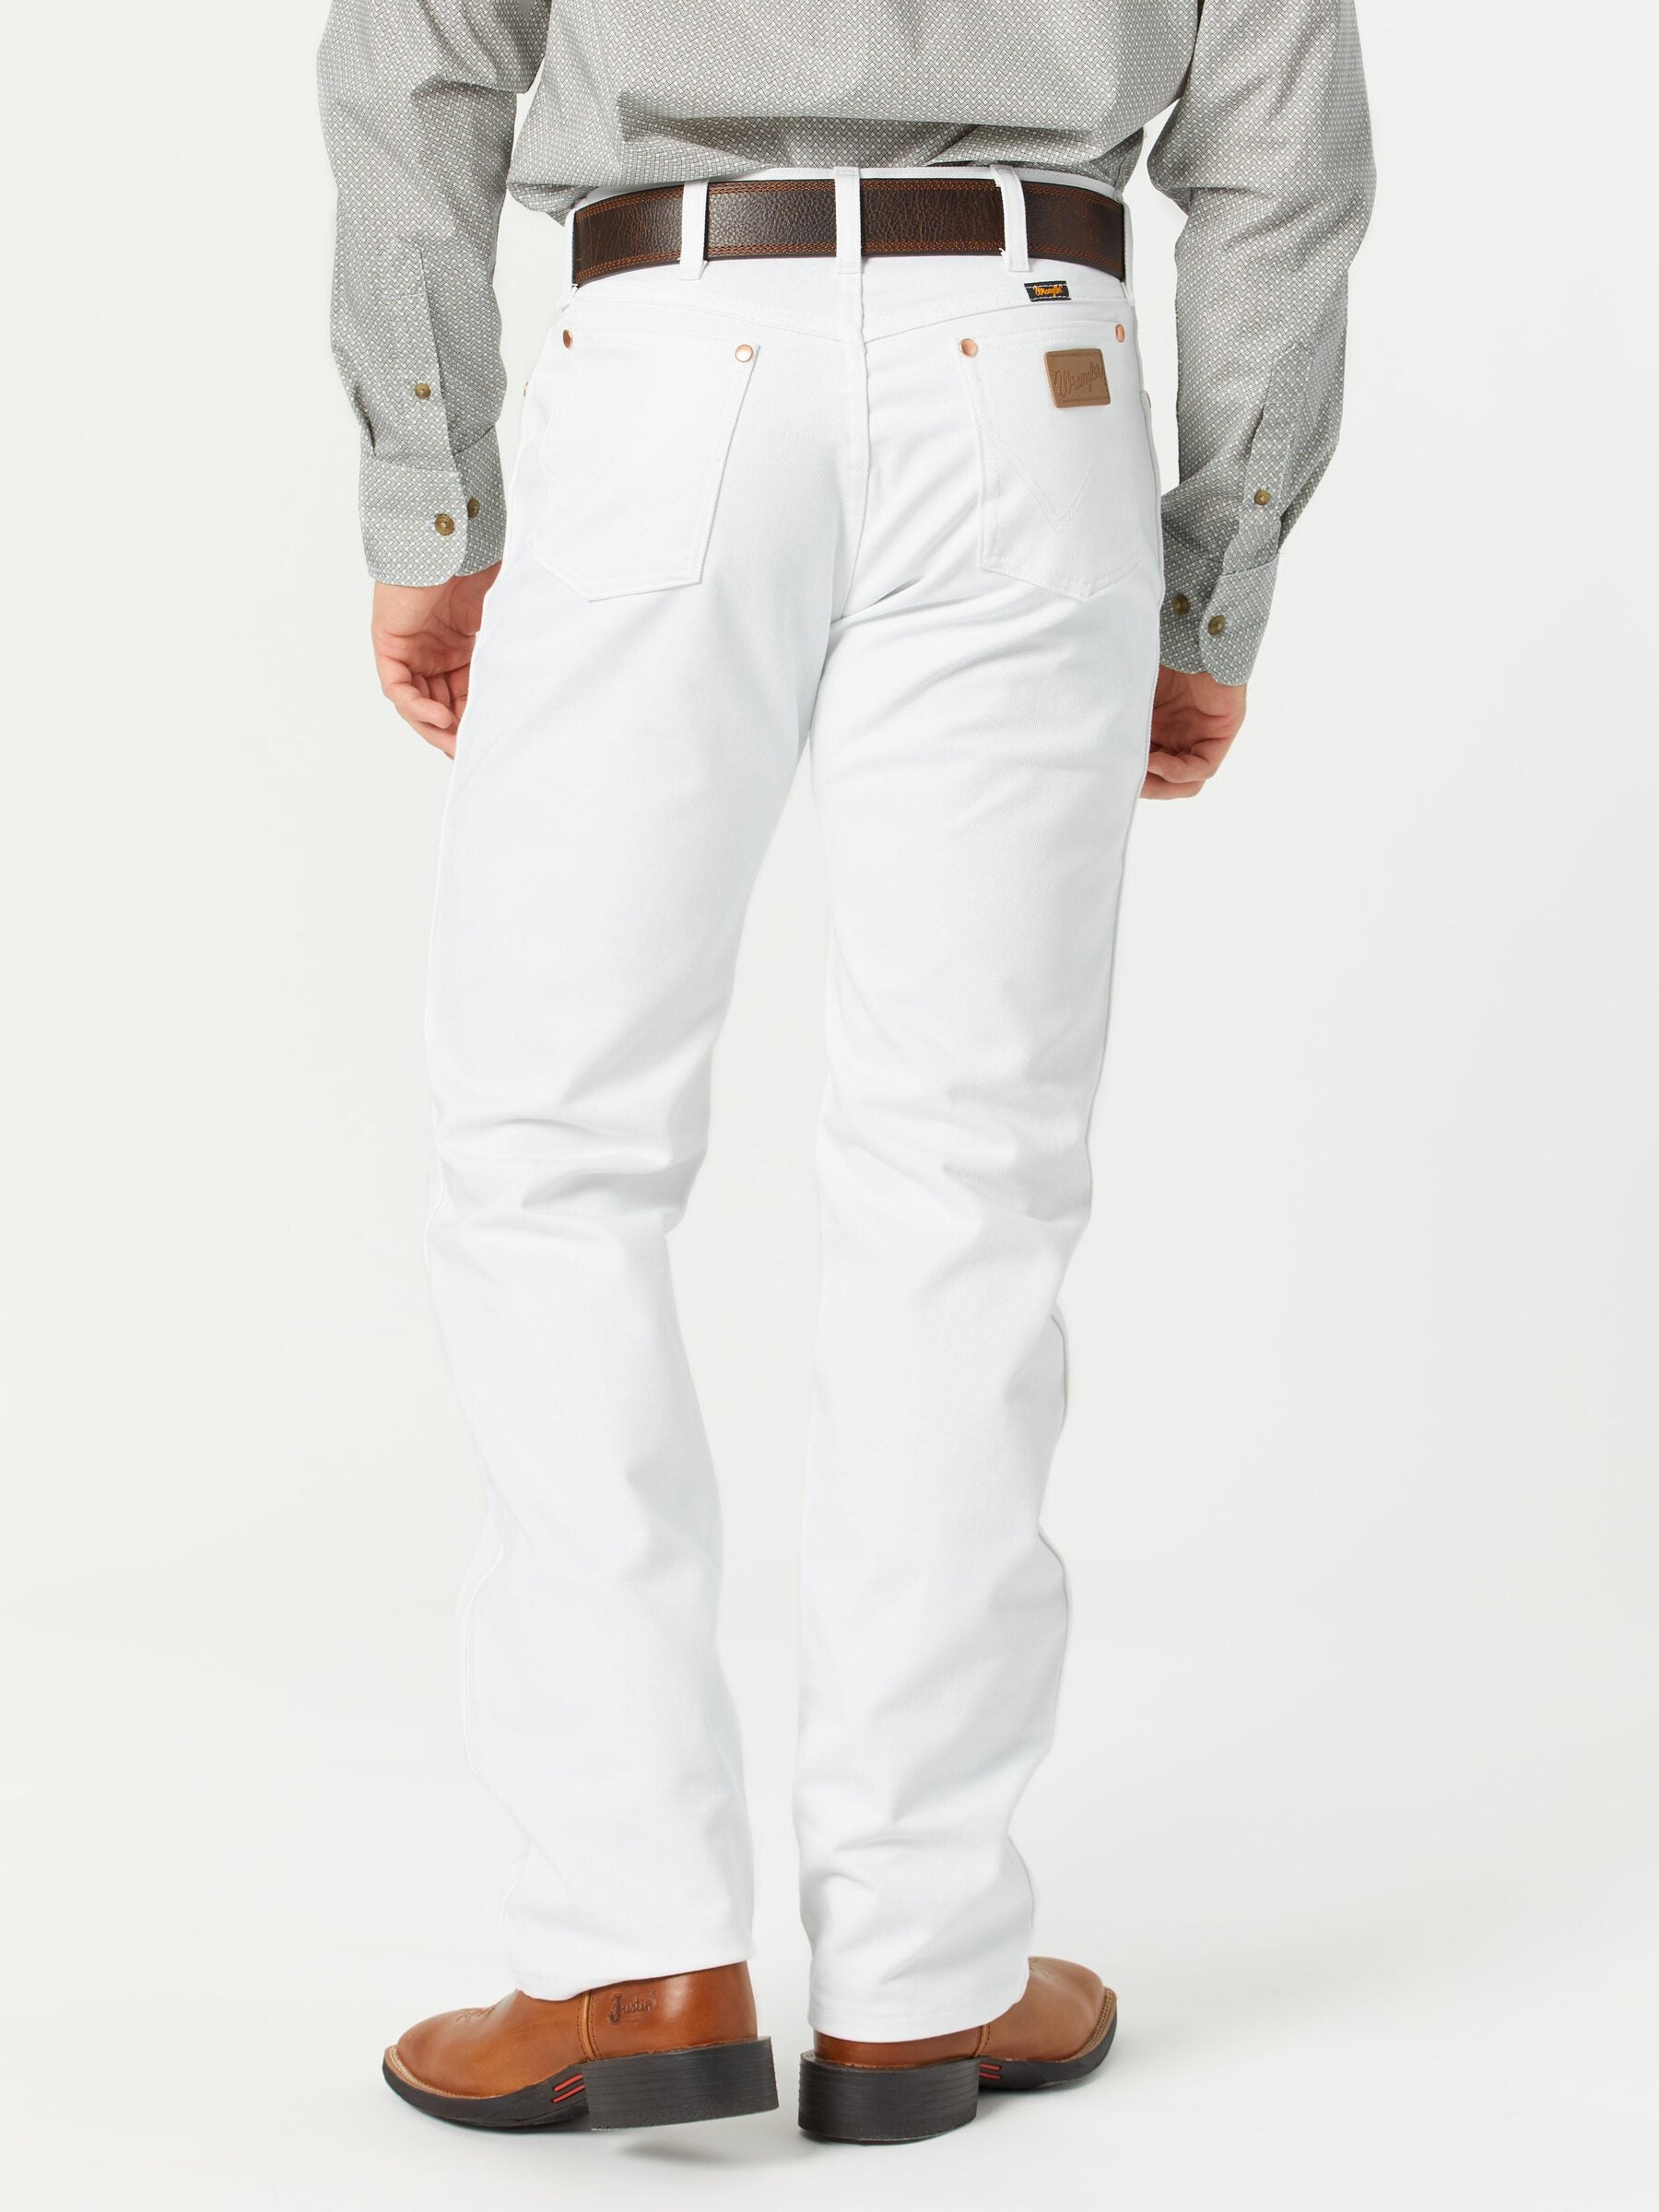 Wrangler 13MWZ 4H & FFA Men's White Denim Jeans